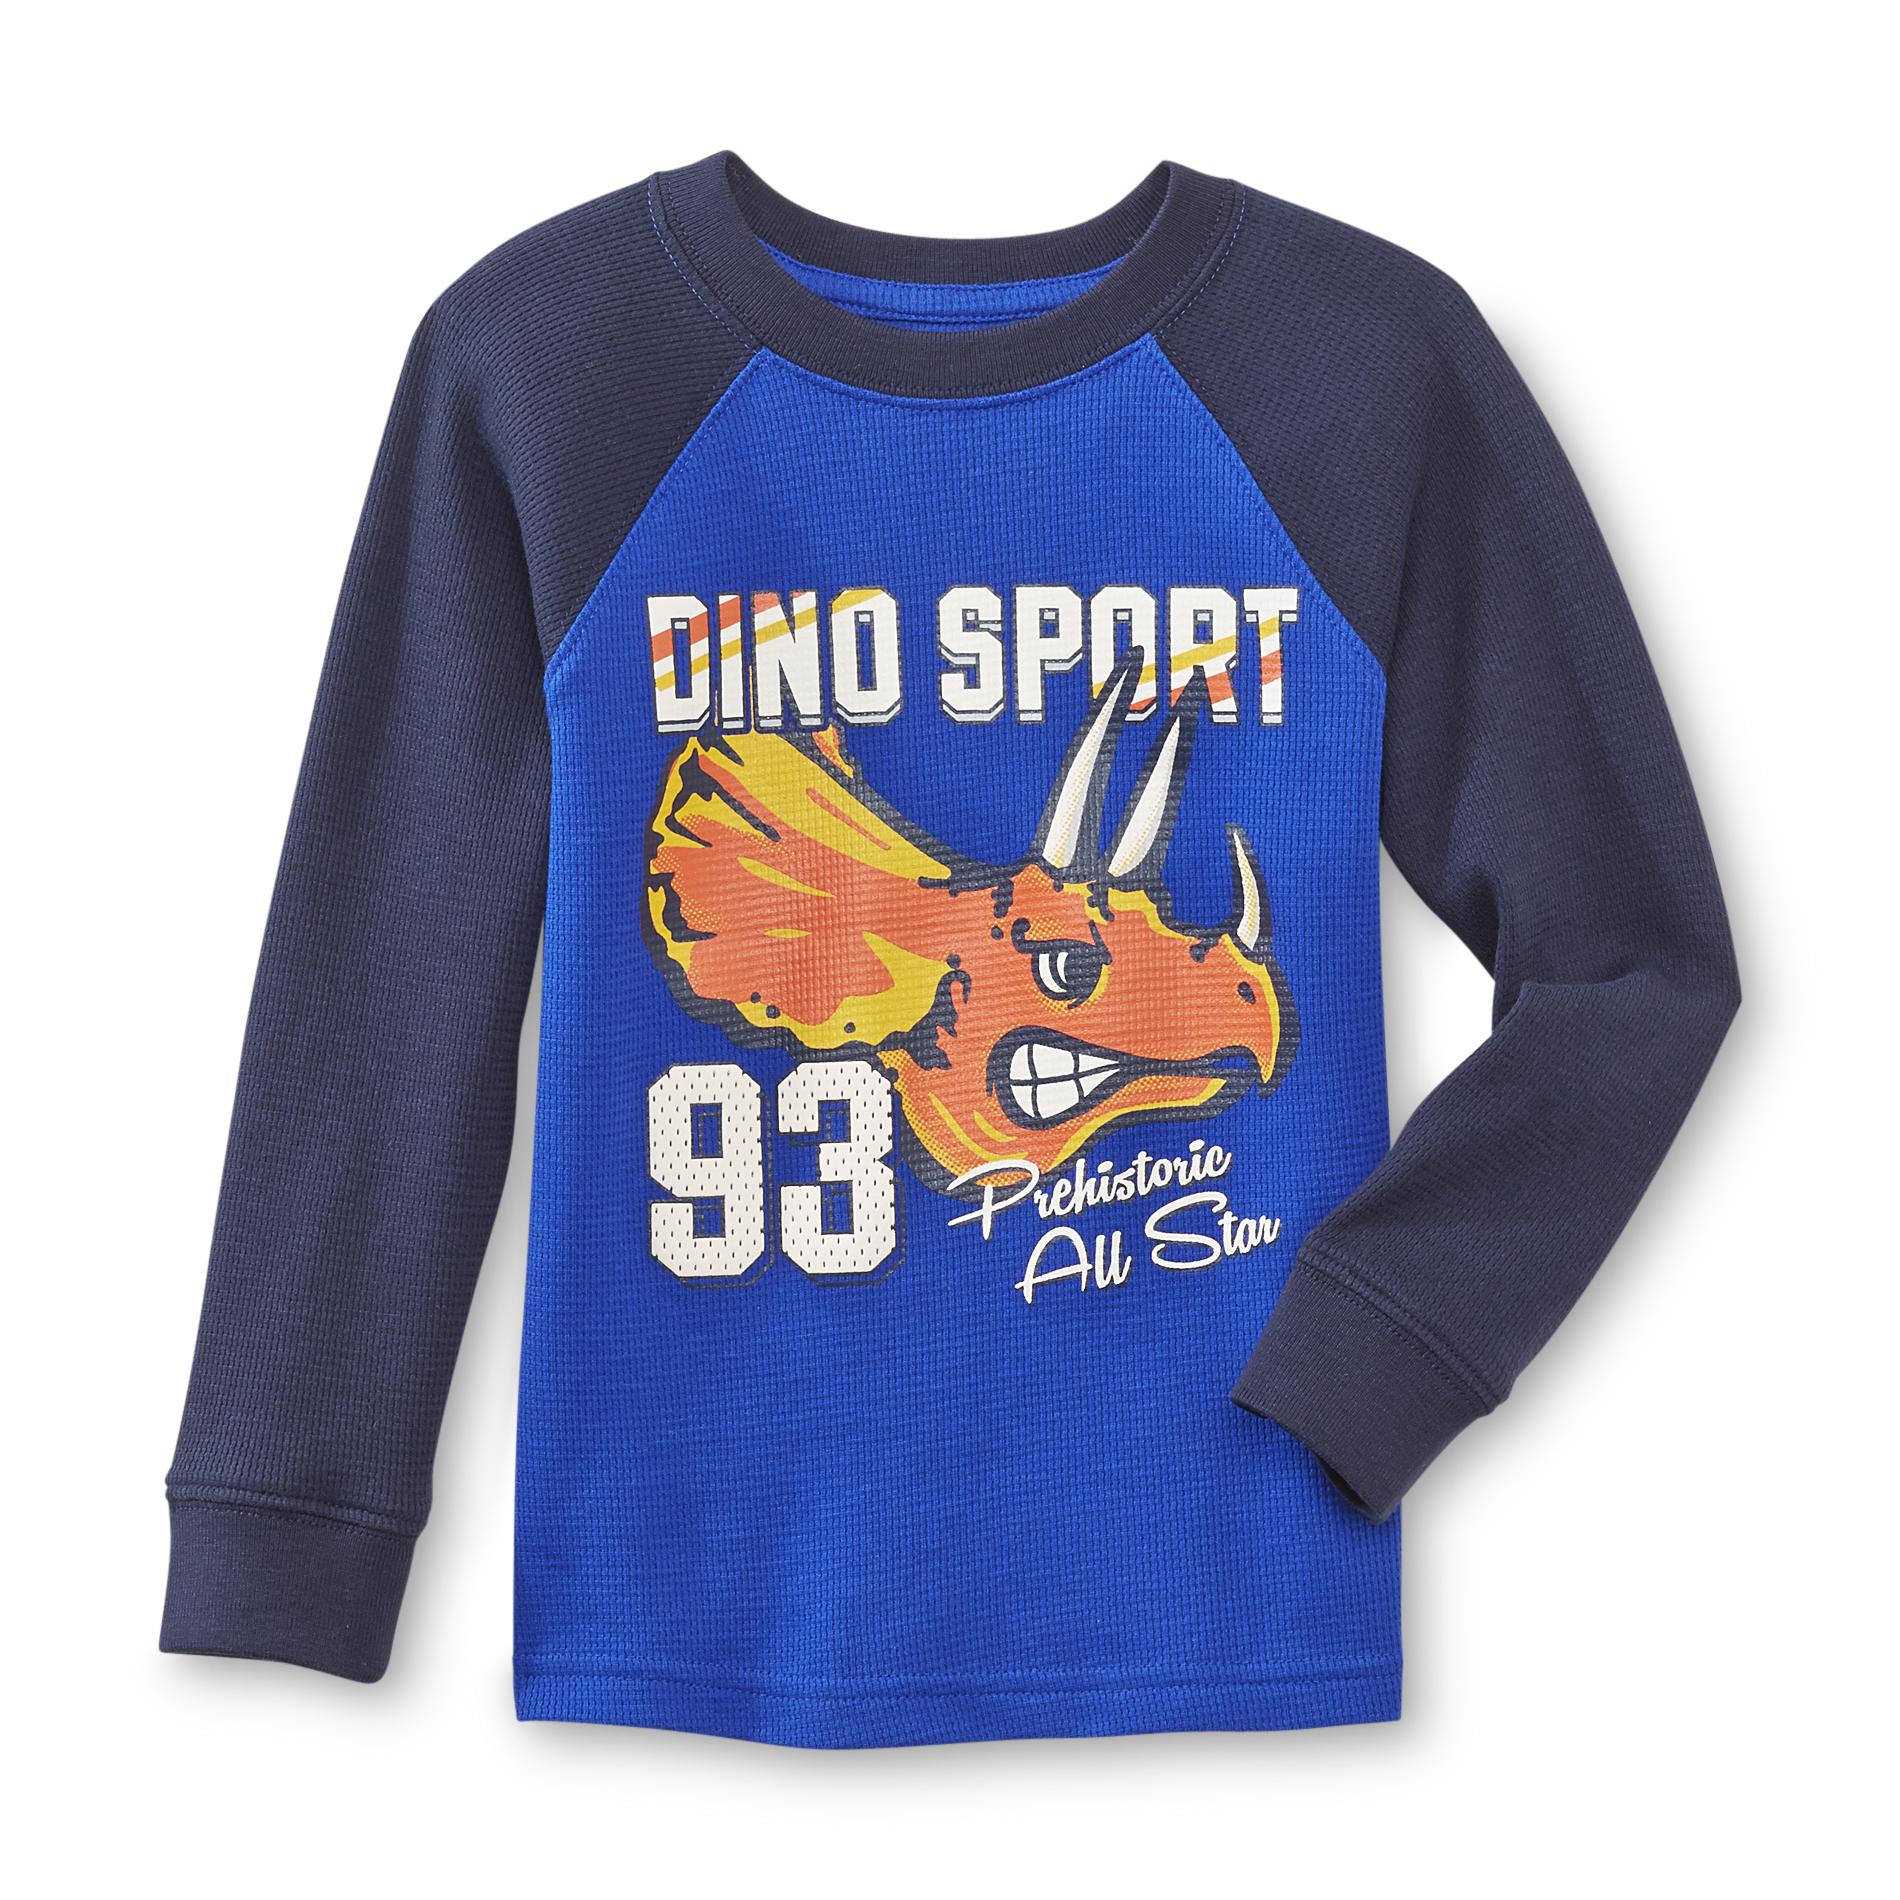 Toughskins Infant & Toddler Boy's Graphic Thermal Shirt - Dino Sport